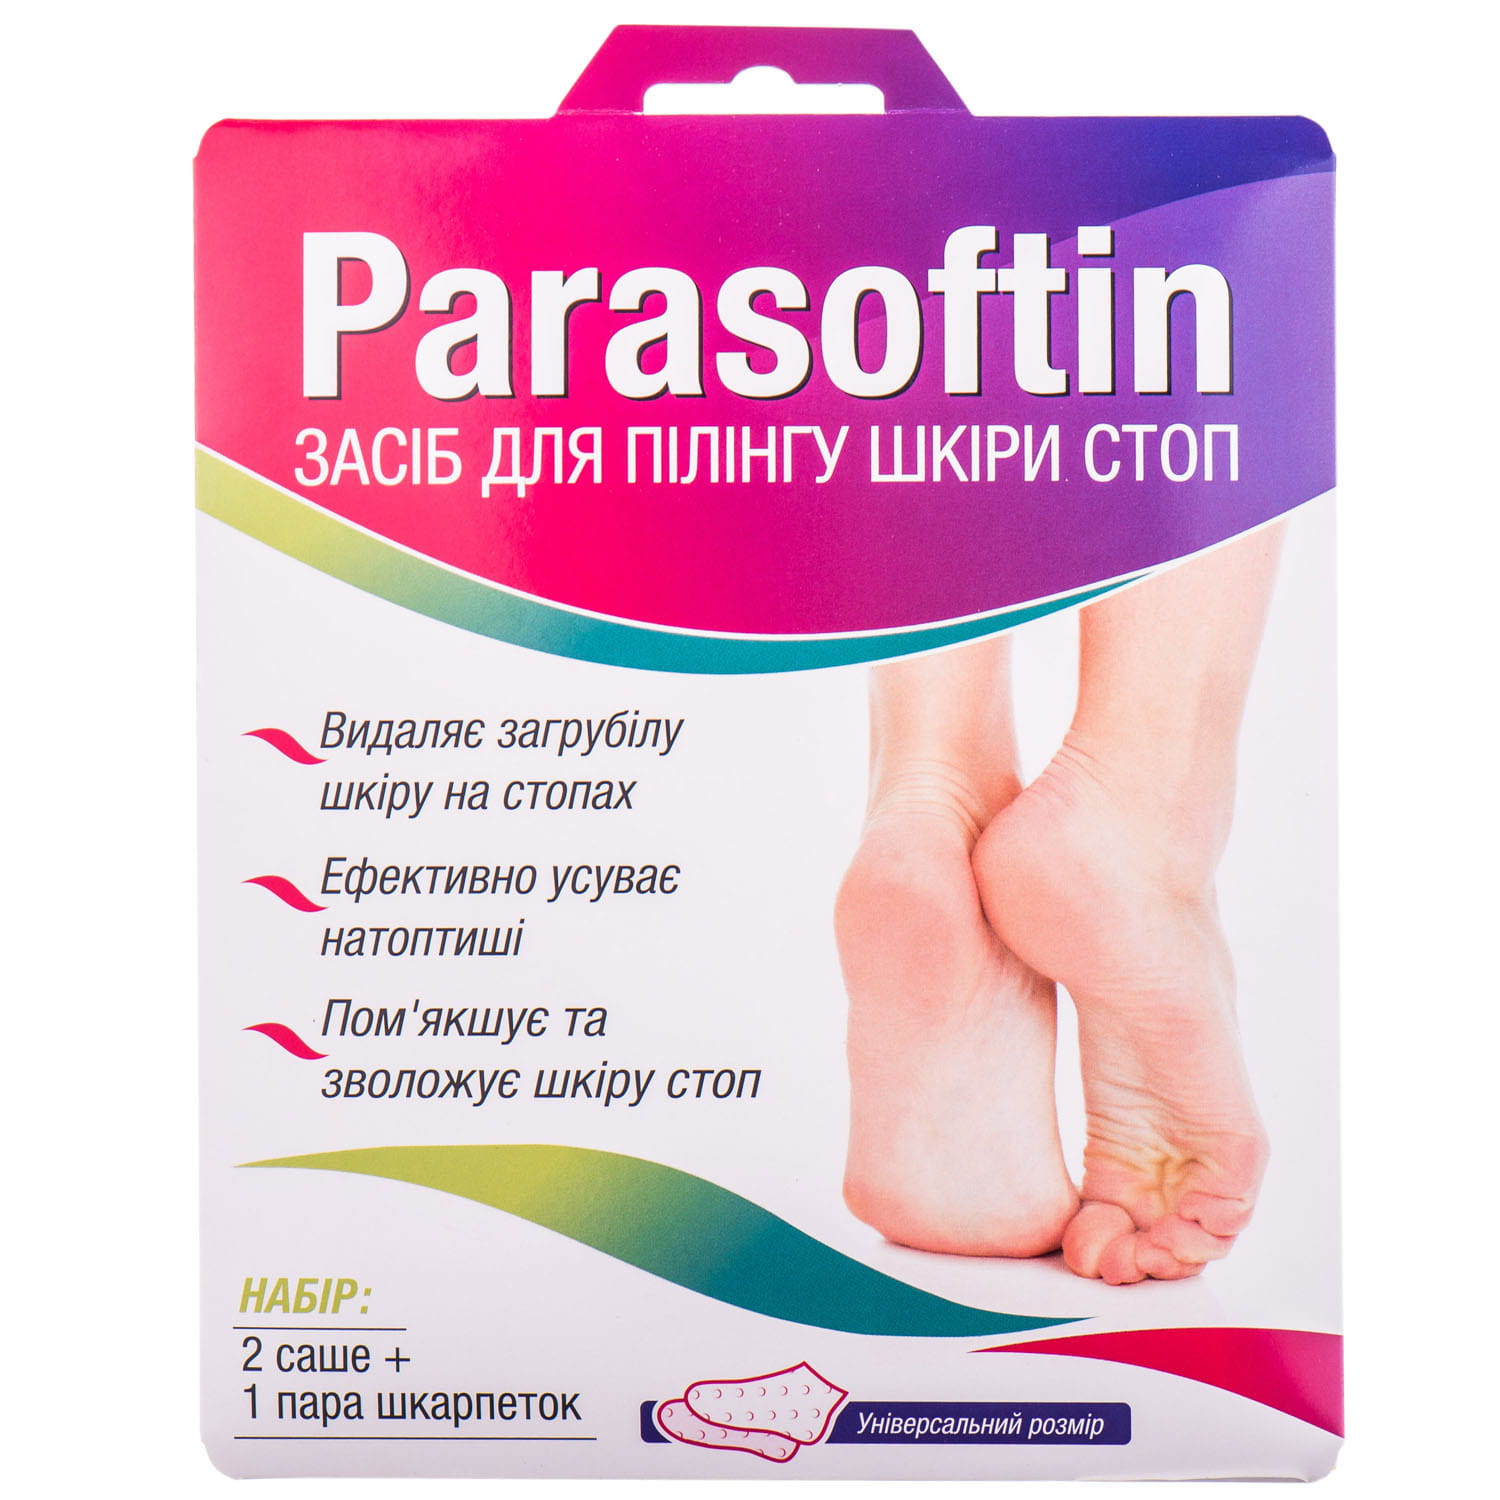 Parasoftin. Аптечные носочки.